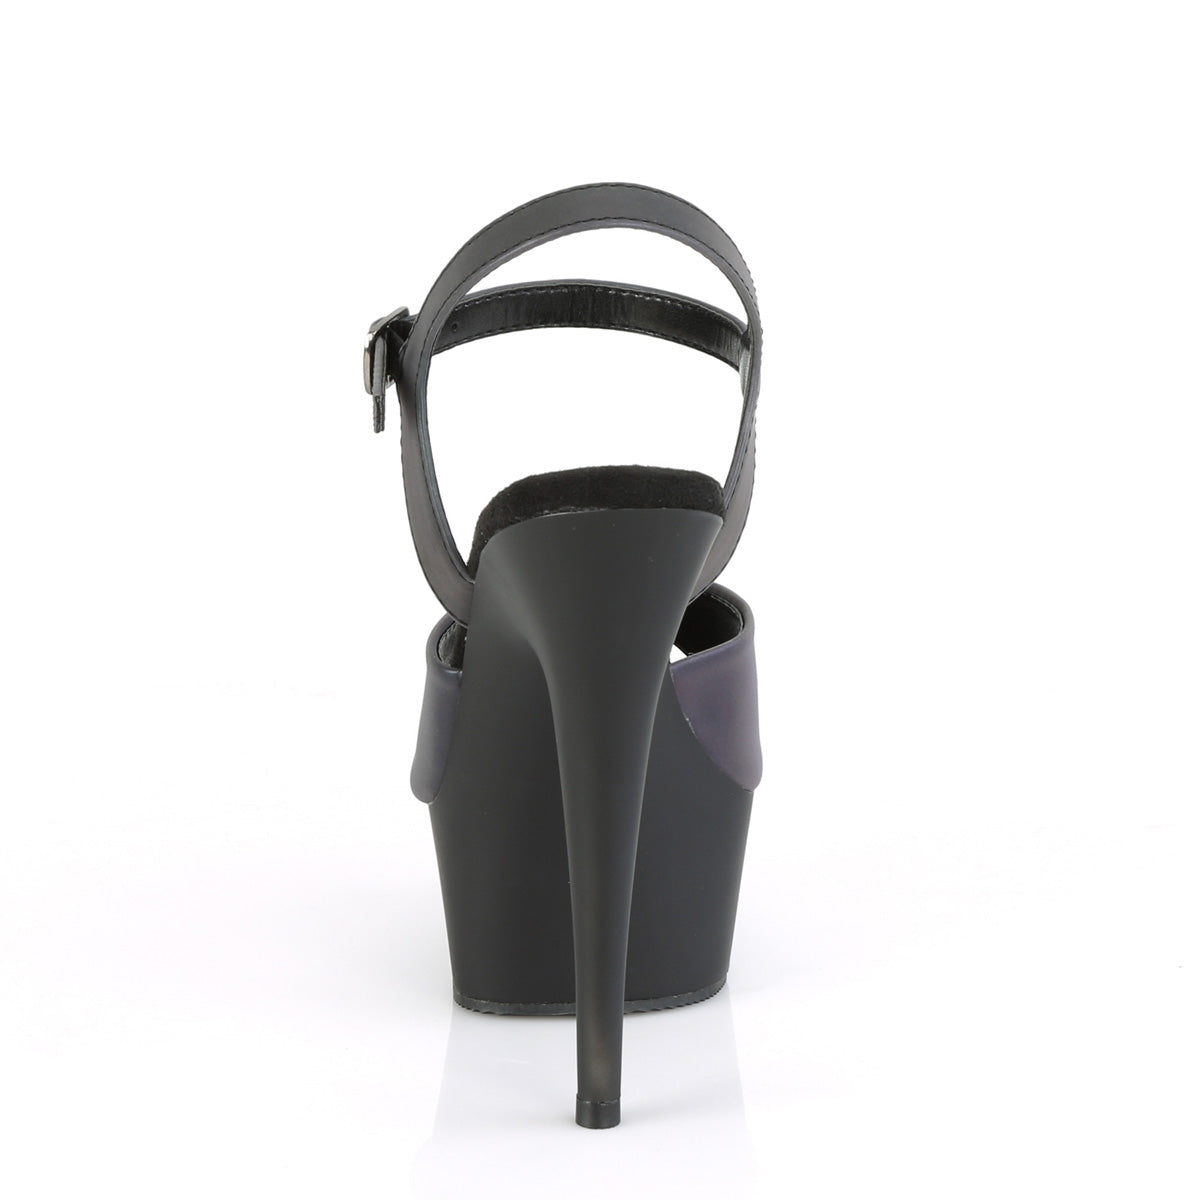 Pleaser Womens Sandals DELIGHT-609REFL Green Multi Reflective/Blk Matte